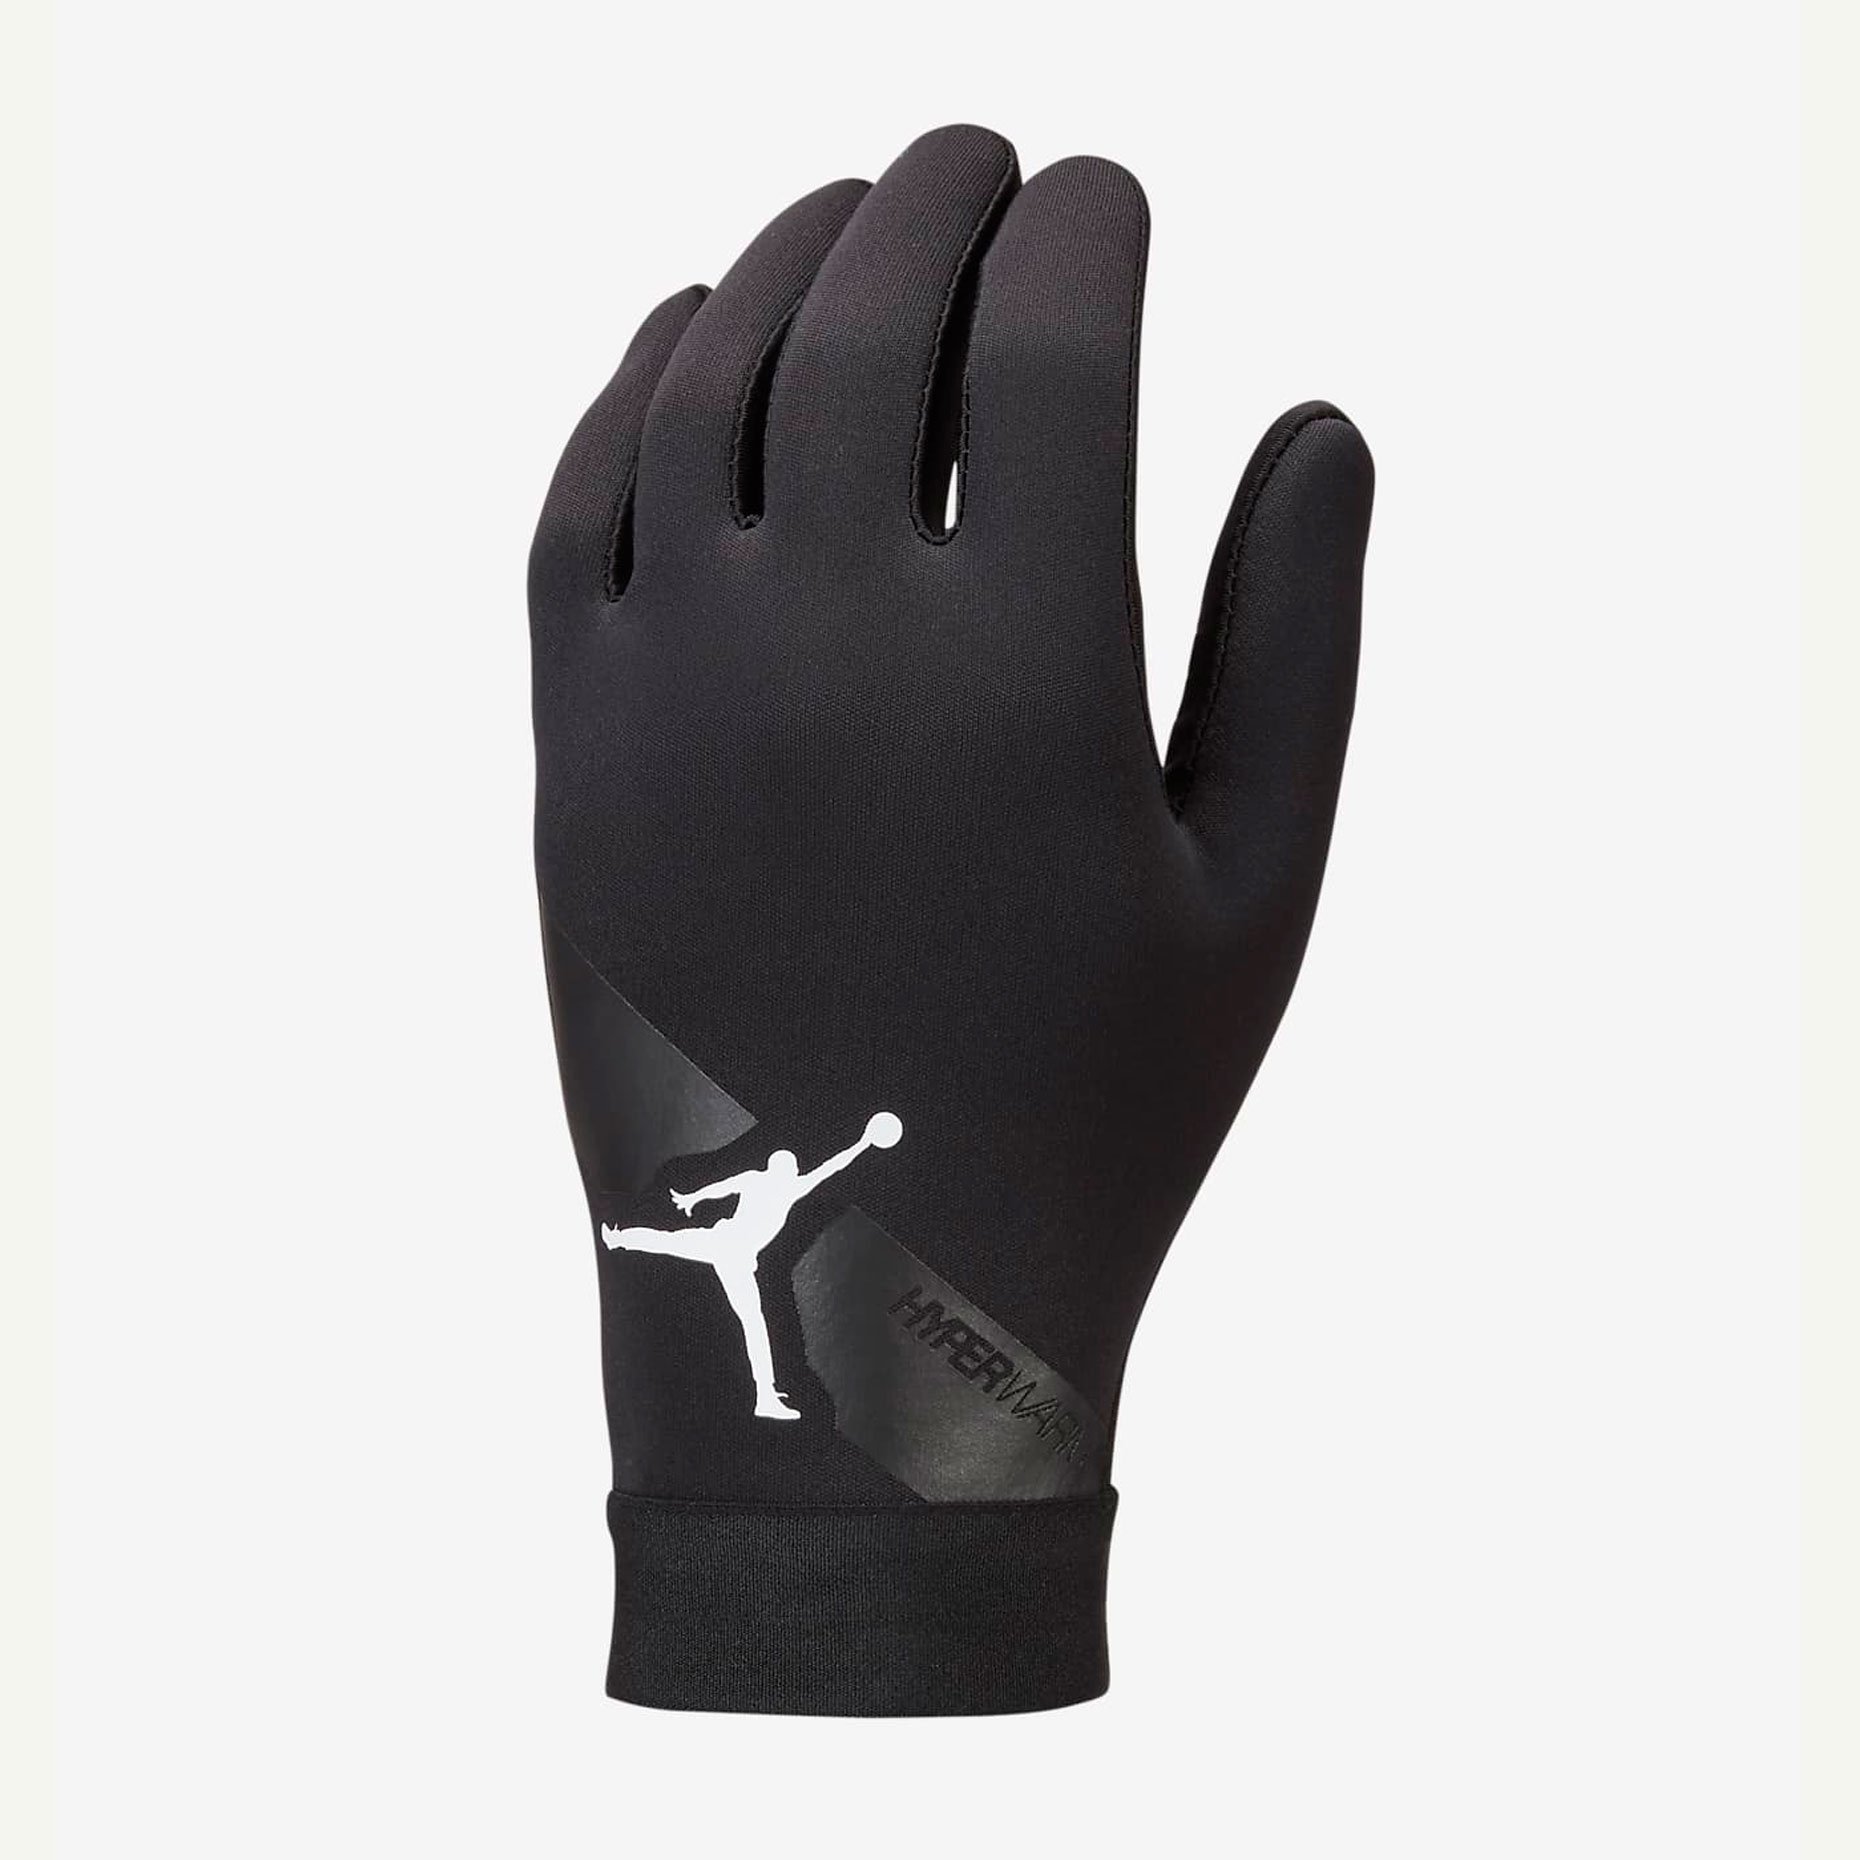 Утепленные перчатки Jordan ФК «Пари Сен-Жермен» (ПСЖ/PSG) HyperWarm